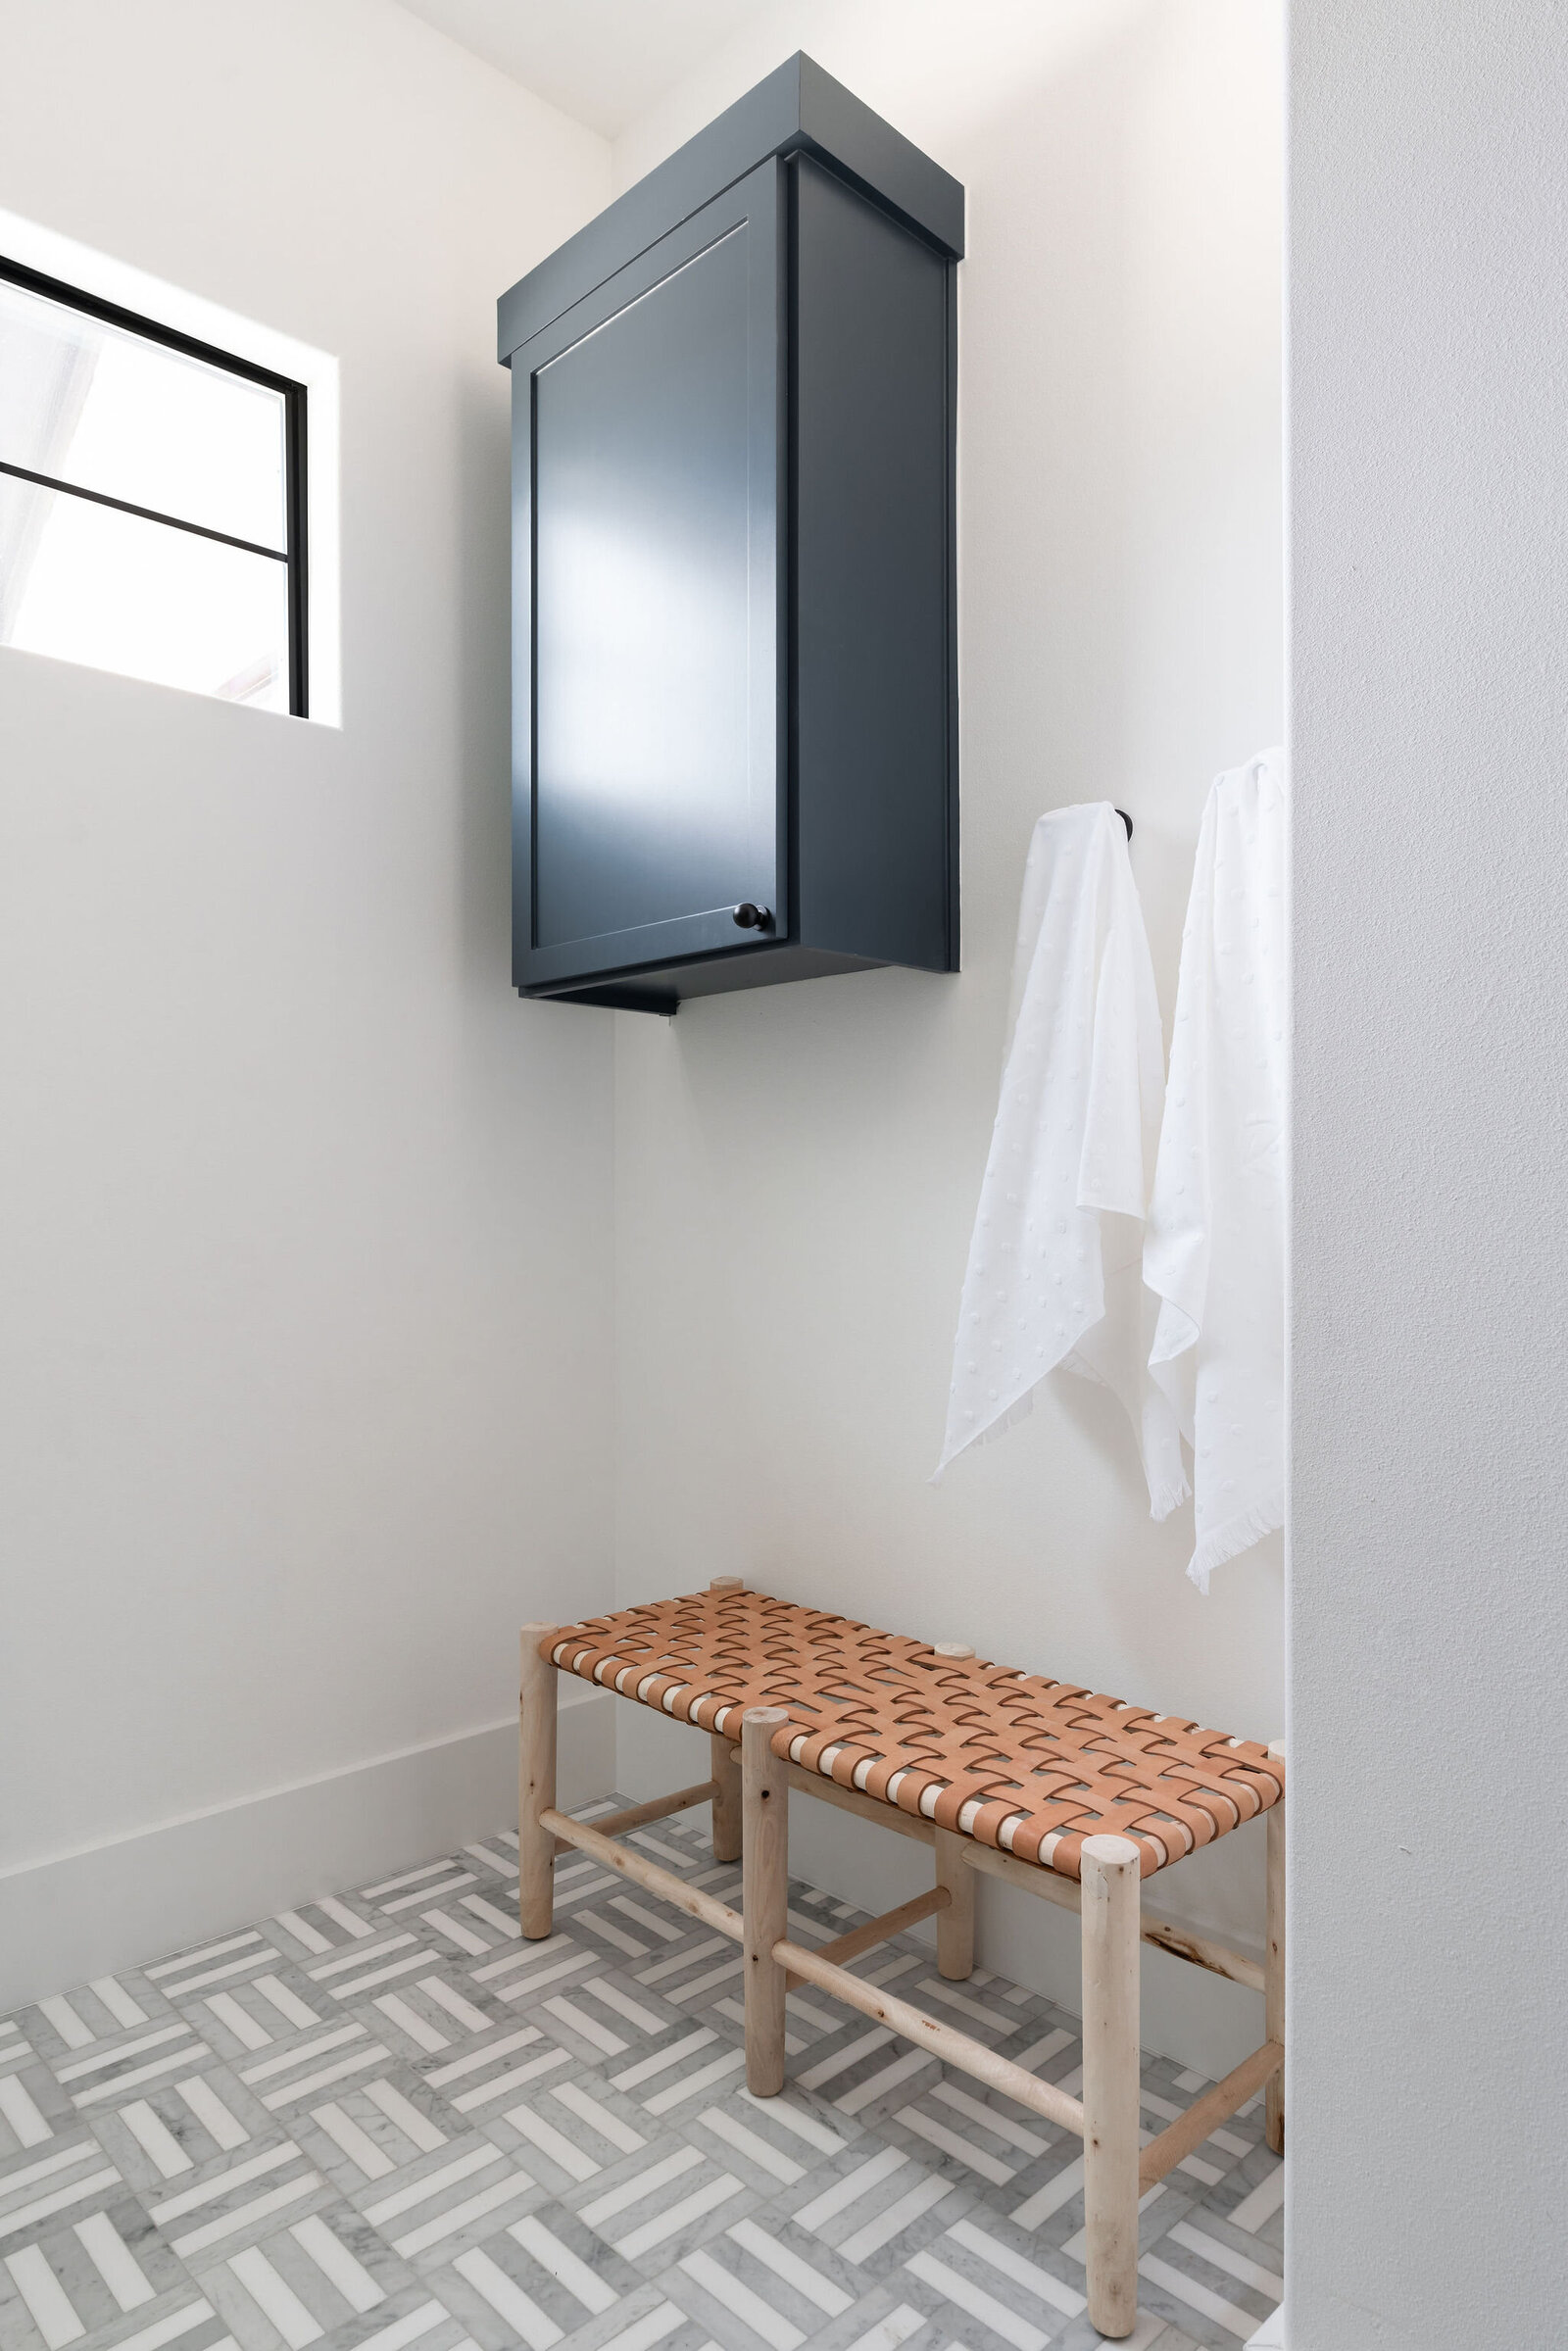 NuelaDesign_White and Gray Marble Geometric Floor_Bathroom Design